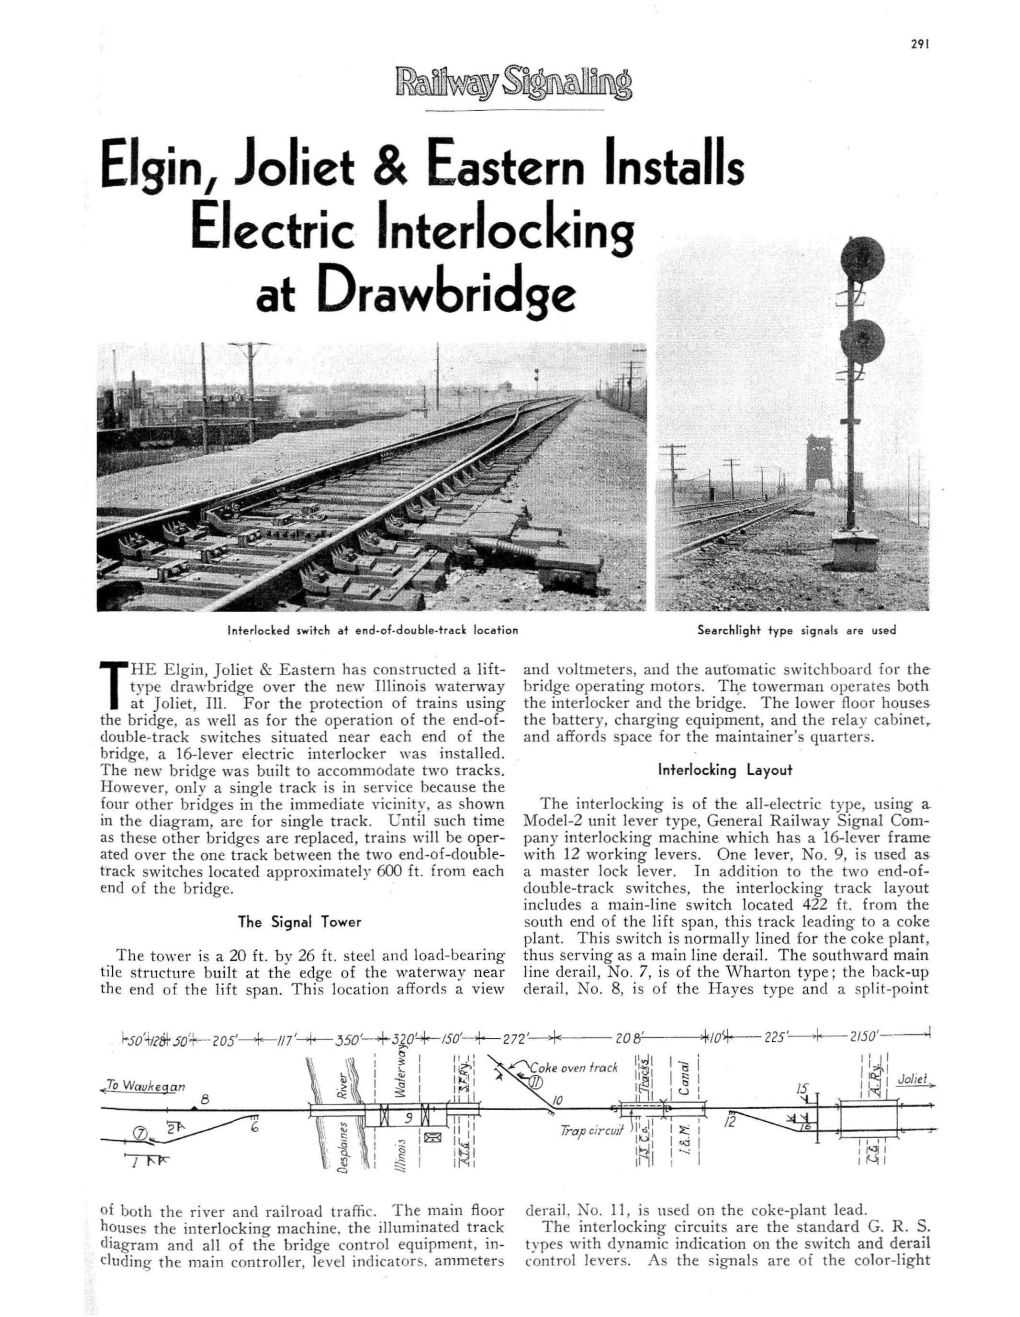 Elgin, Joliet & Eastern Installs Electric Interlocking at Drawbridge